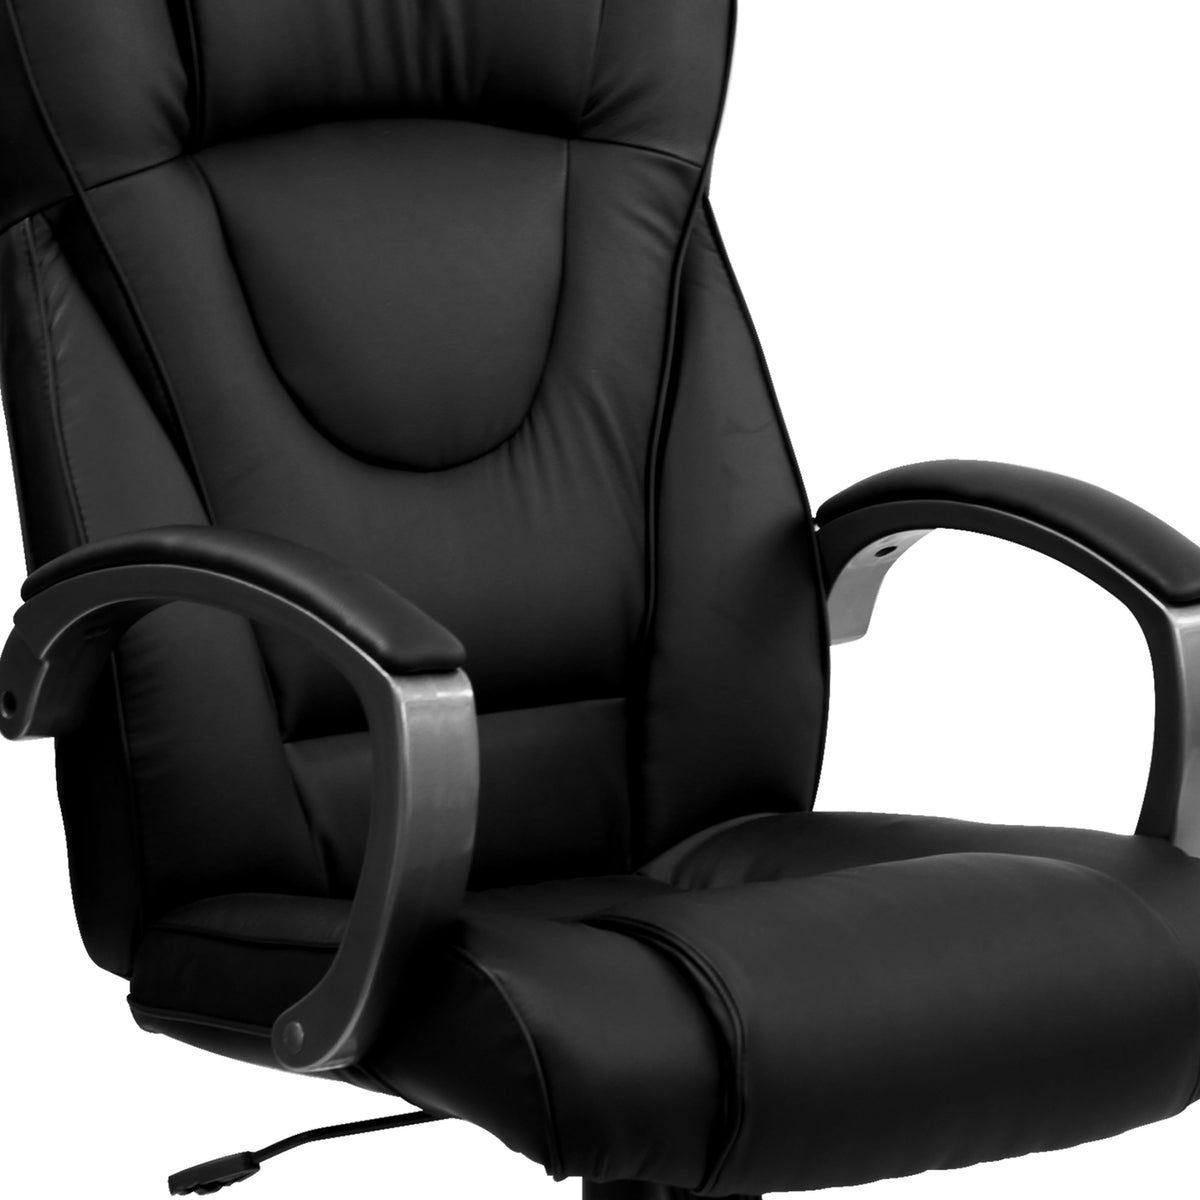 High Back Black LeatherSoft Swivel Office Chair with Titanium Nylon Base